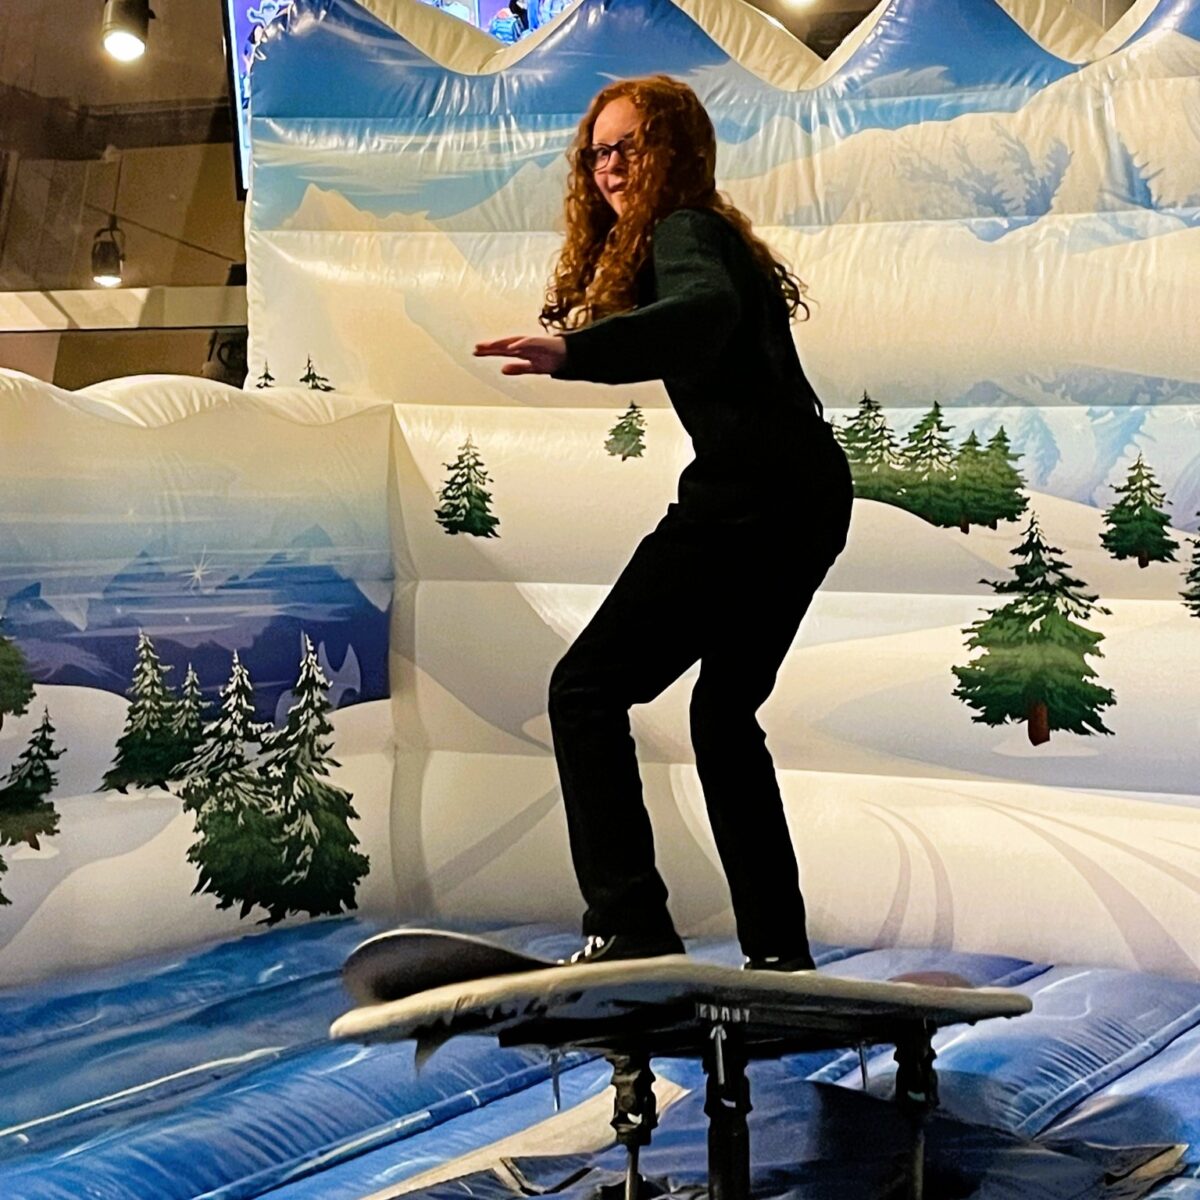 A girl balancing on the snow board machine